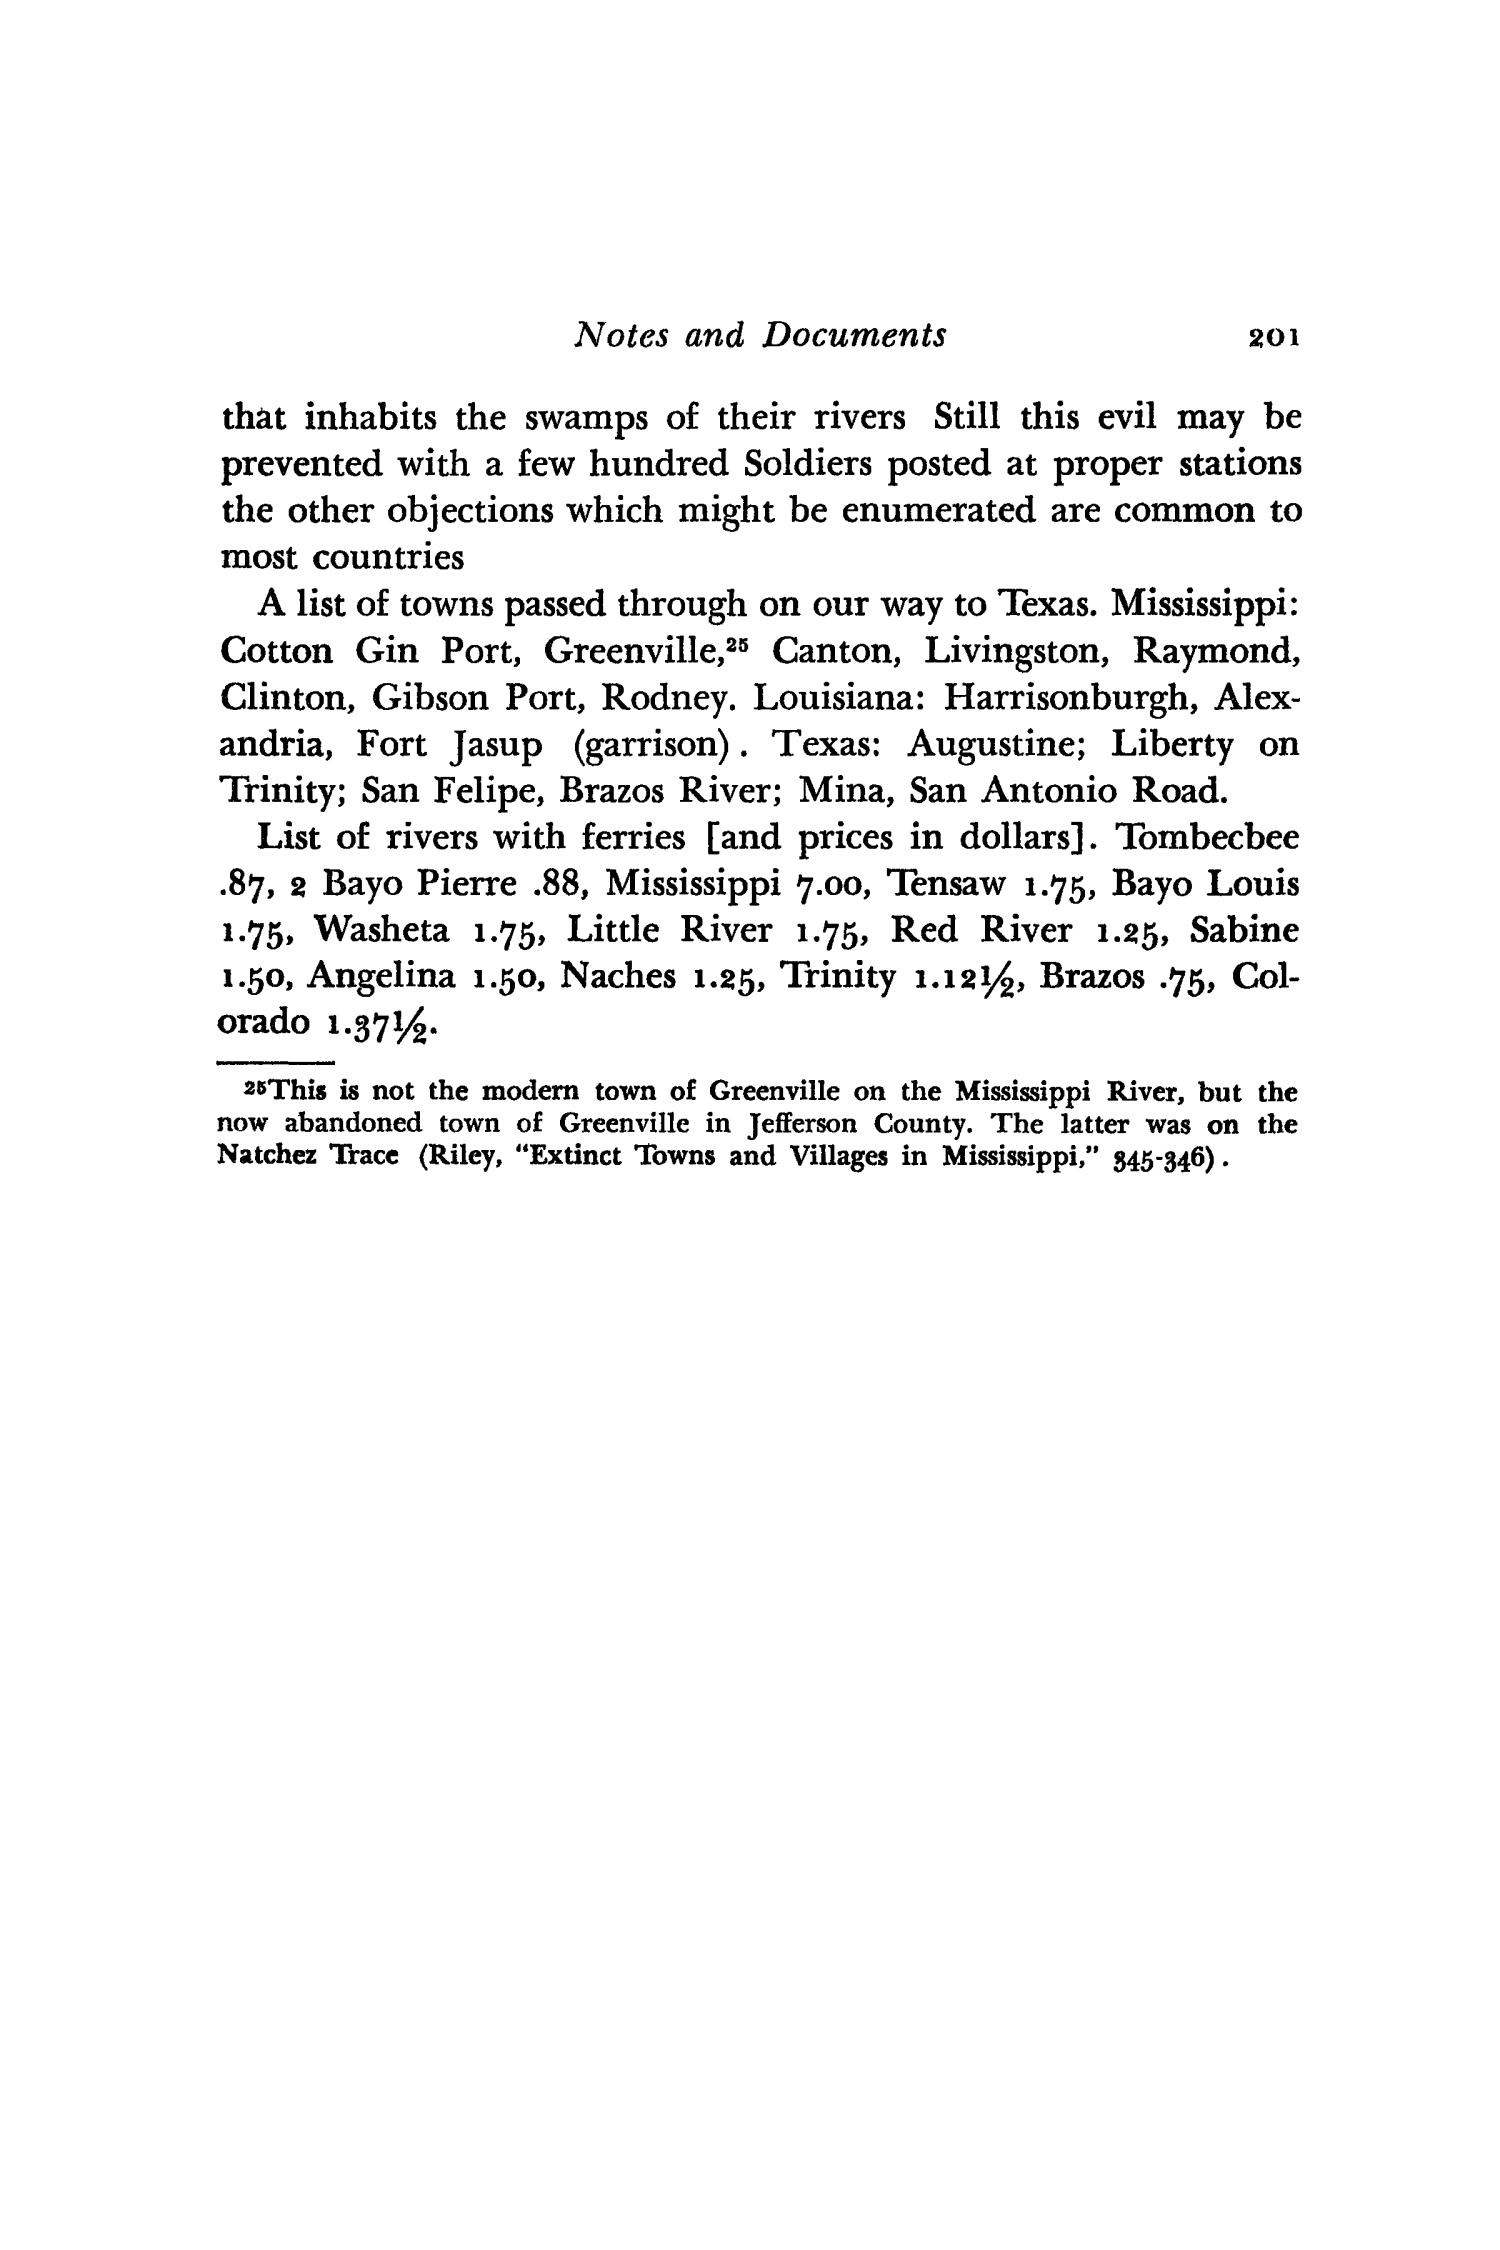 The Southwestern Historical Quarterly, Volume 53, July 1949 - April, 1950
                                                
                                                    201
                                                